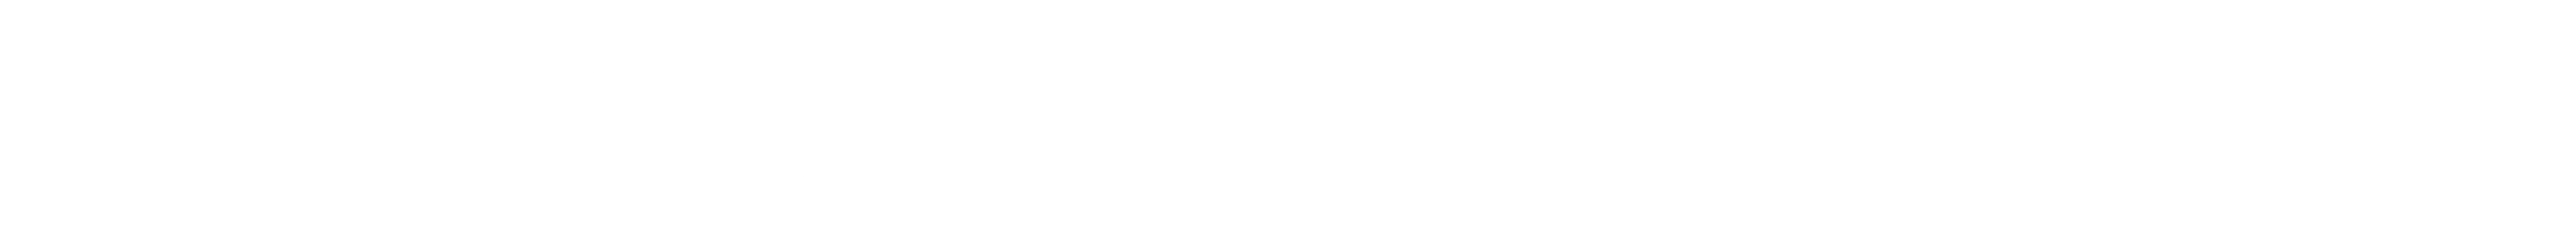 Conjunto de logótipos do IHC, IN2PAST, NOVA FCSH, Universidade de Évora e FCT — monocromático branco